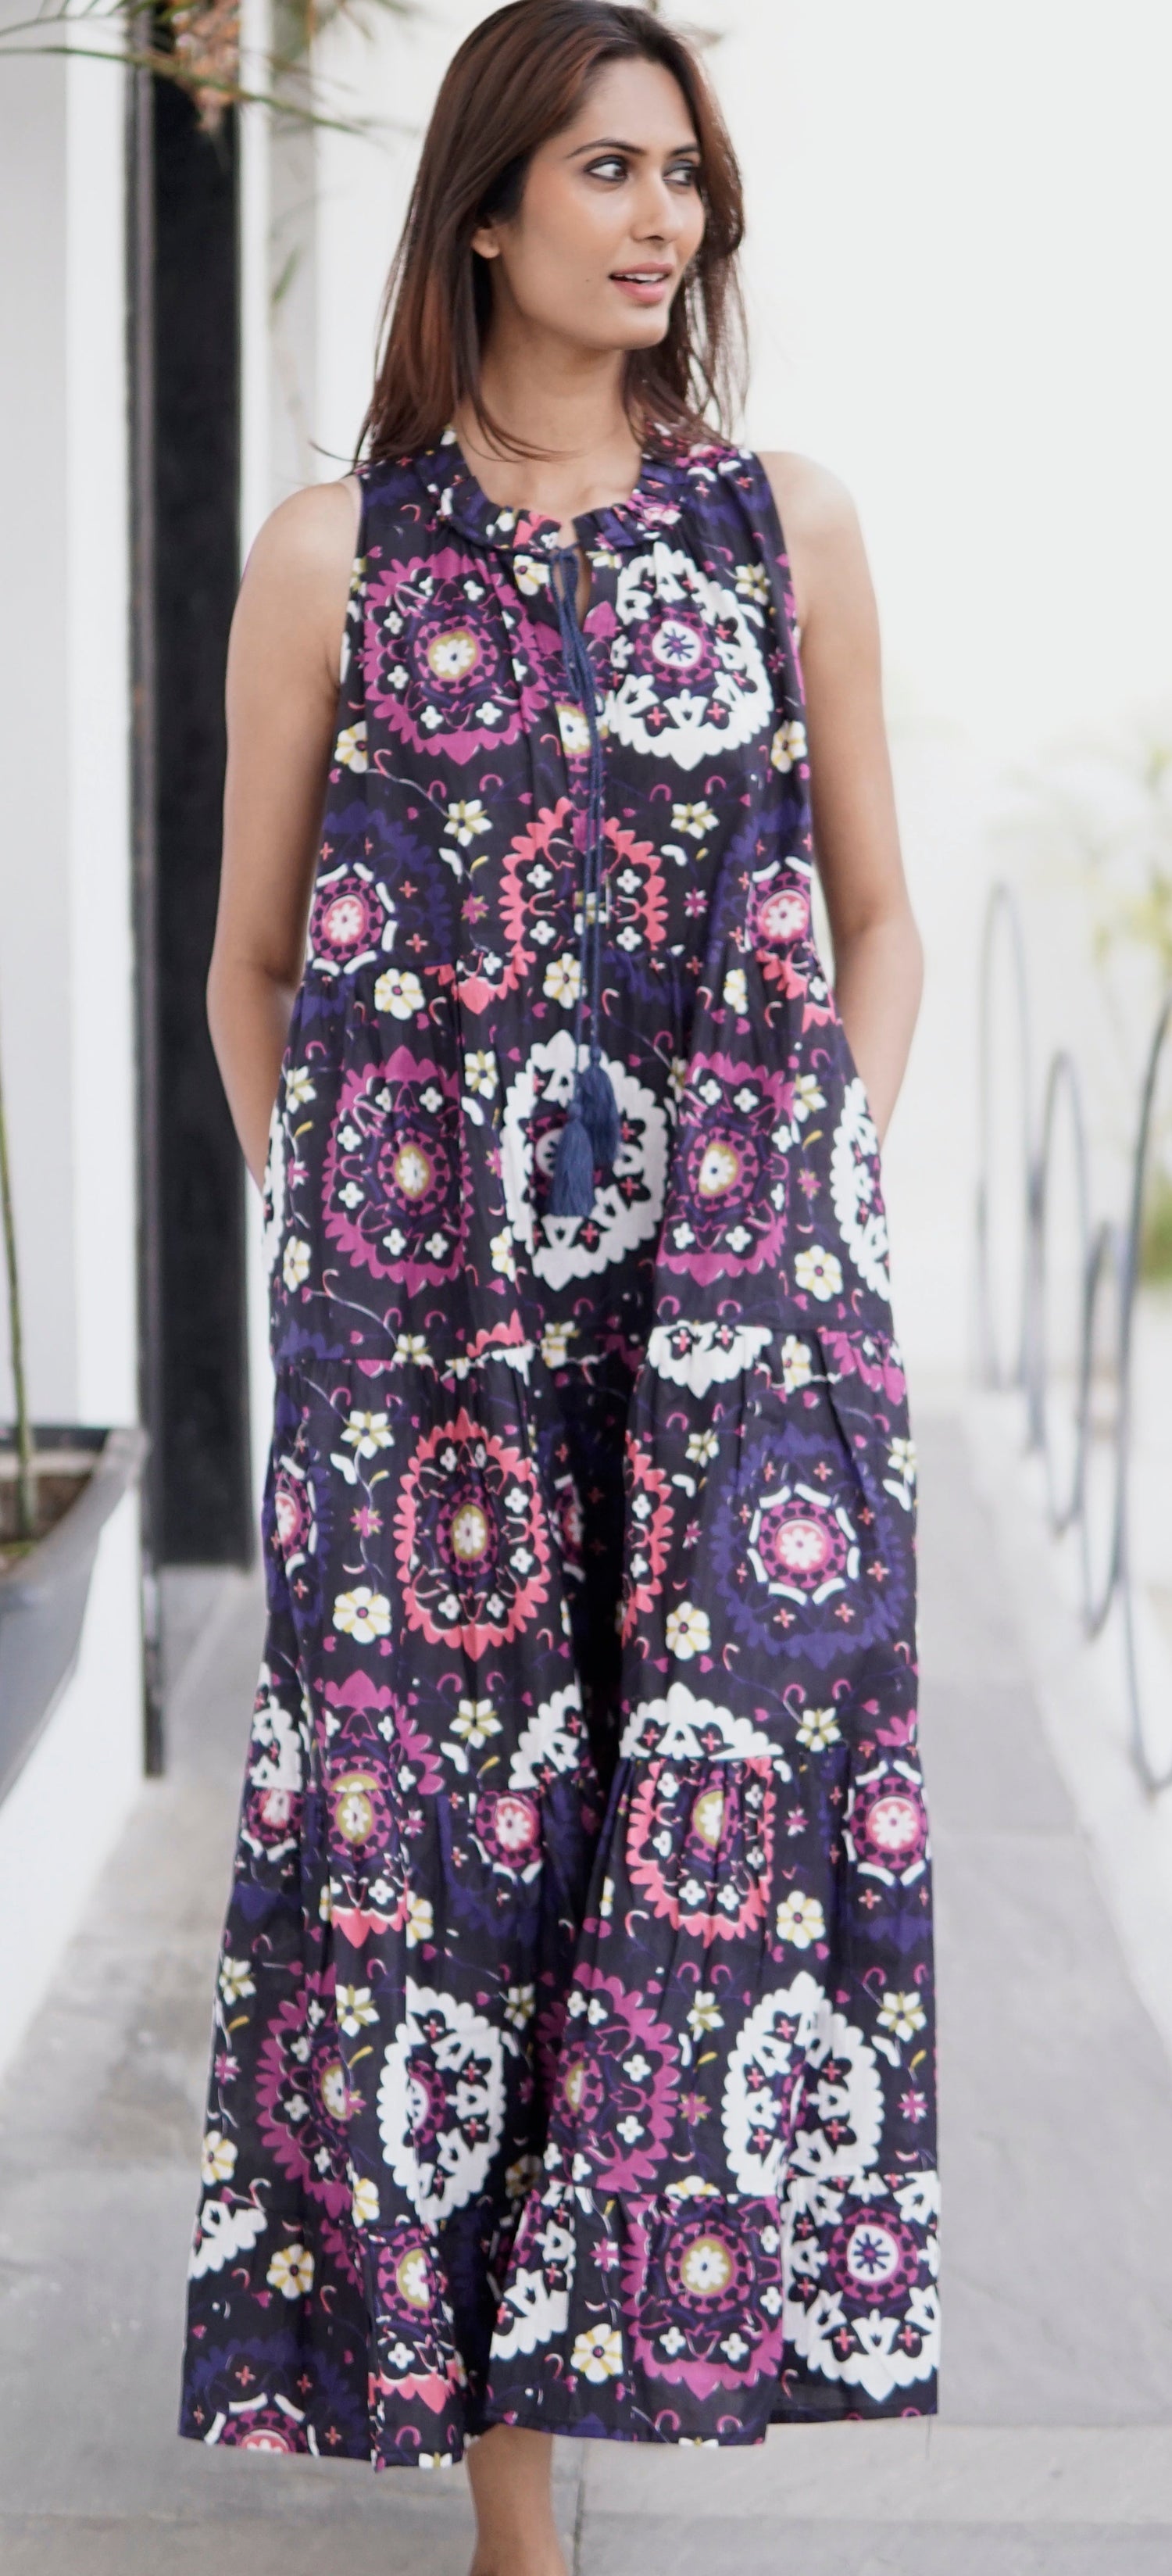 Beach dress, summer maxi dress, striking geometric floral printed cotton summer dress